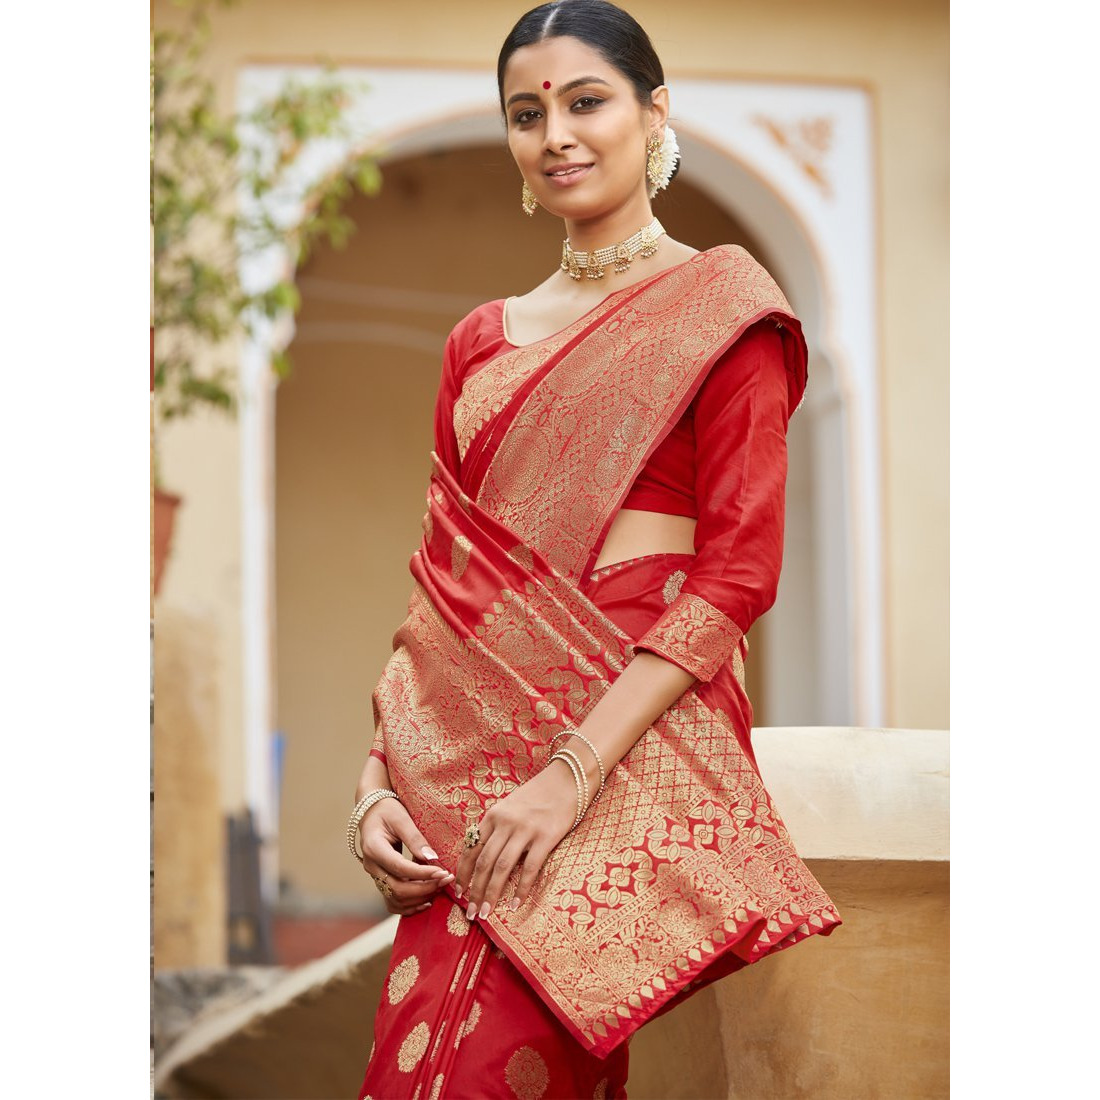 Designer Red Banarasi Silk Traditional Saree For Women